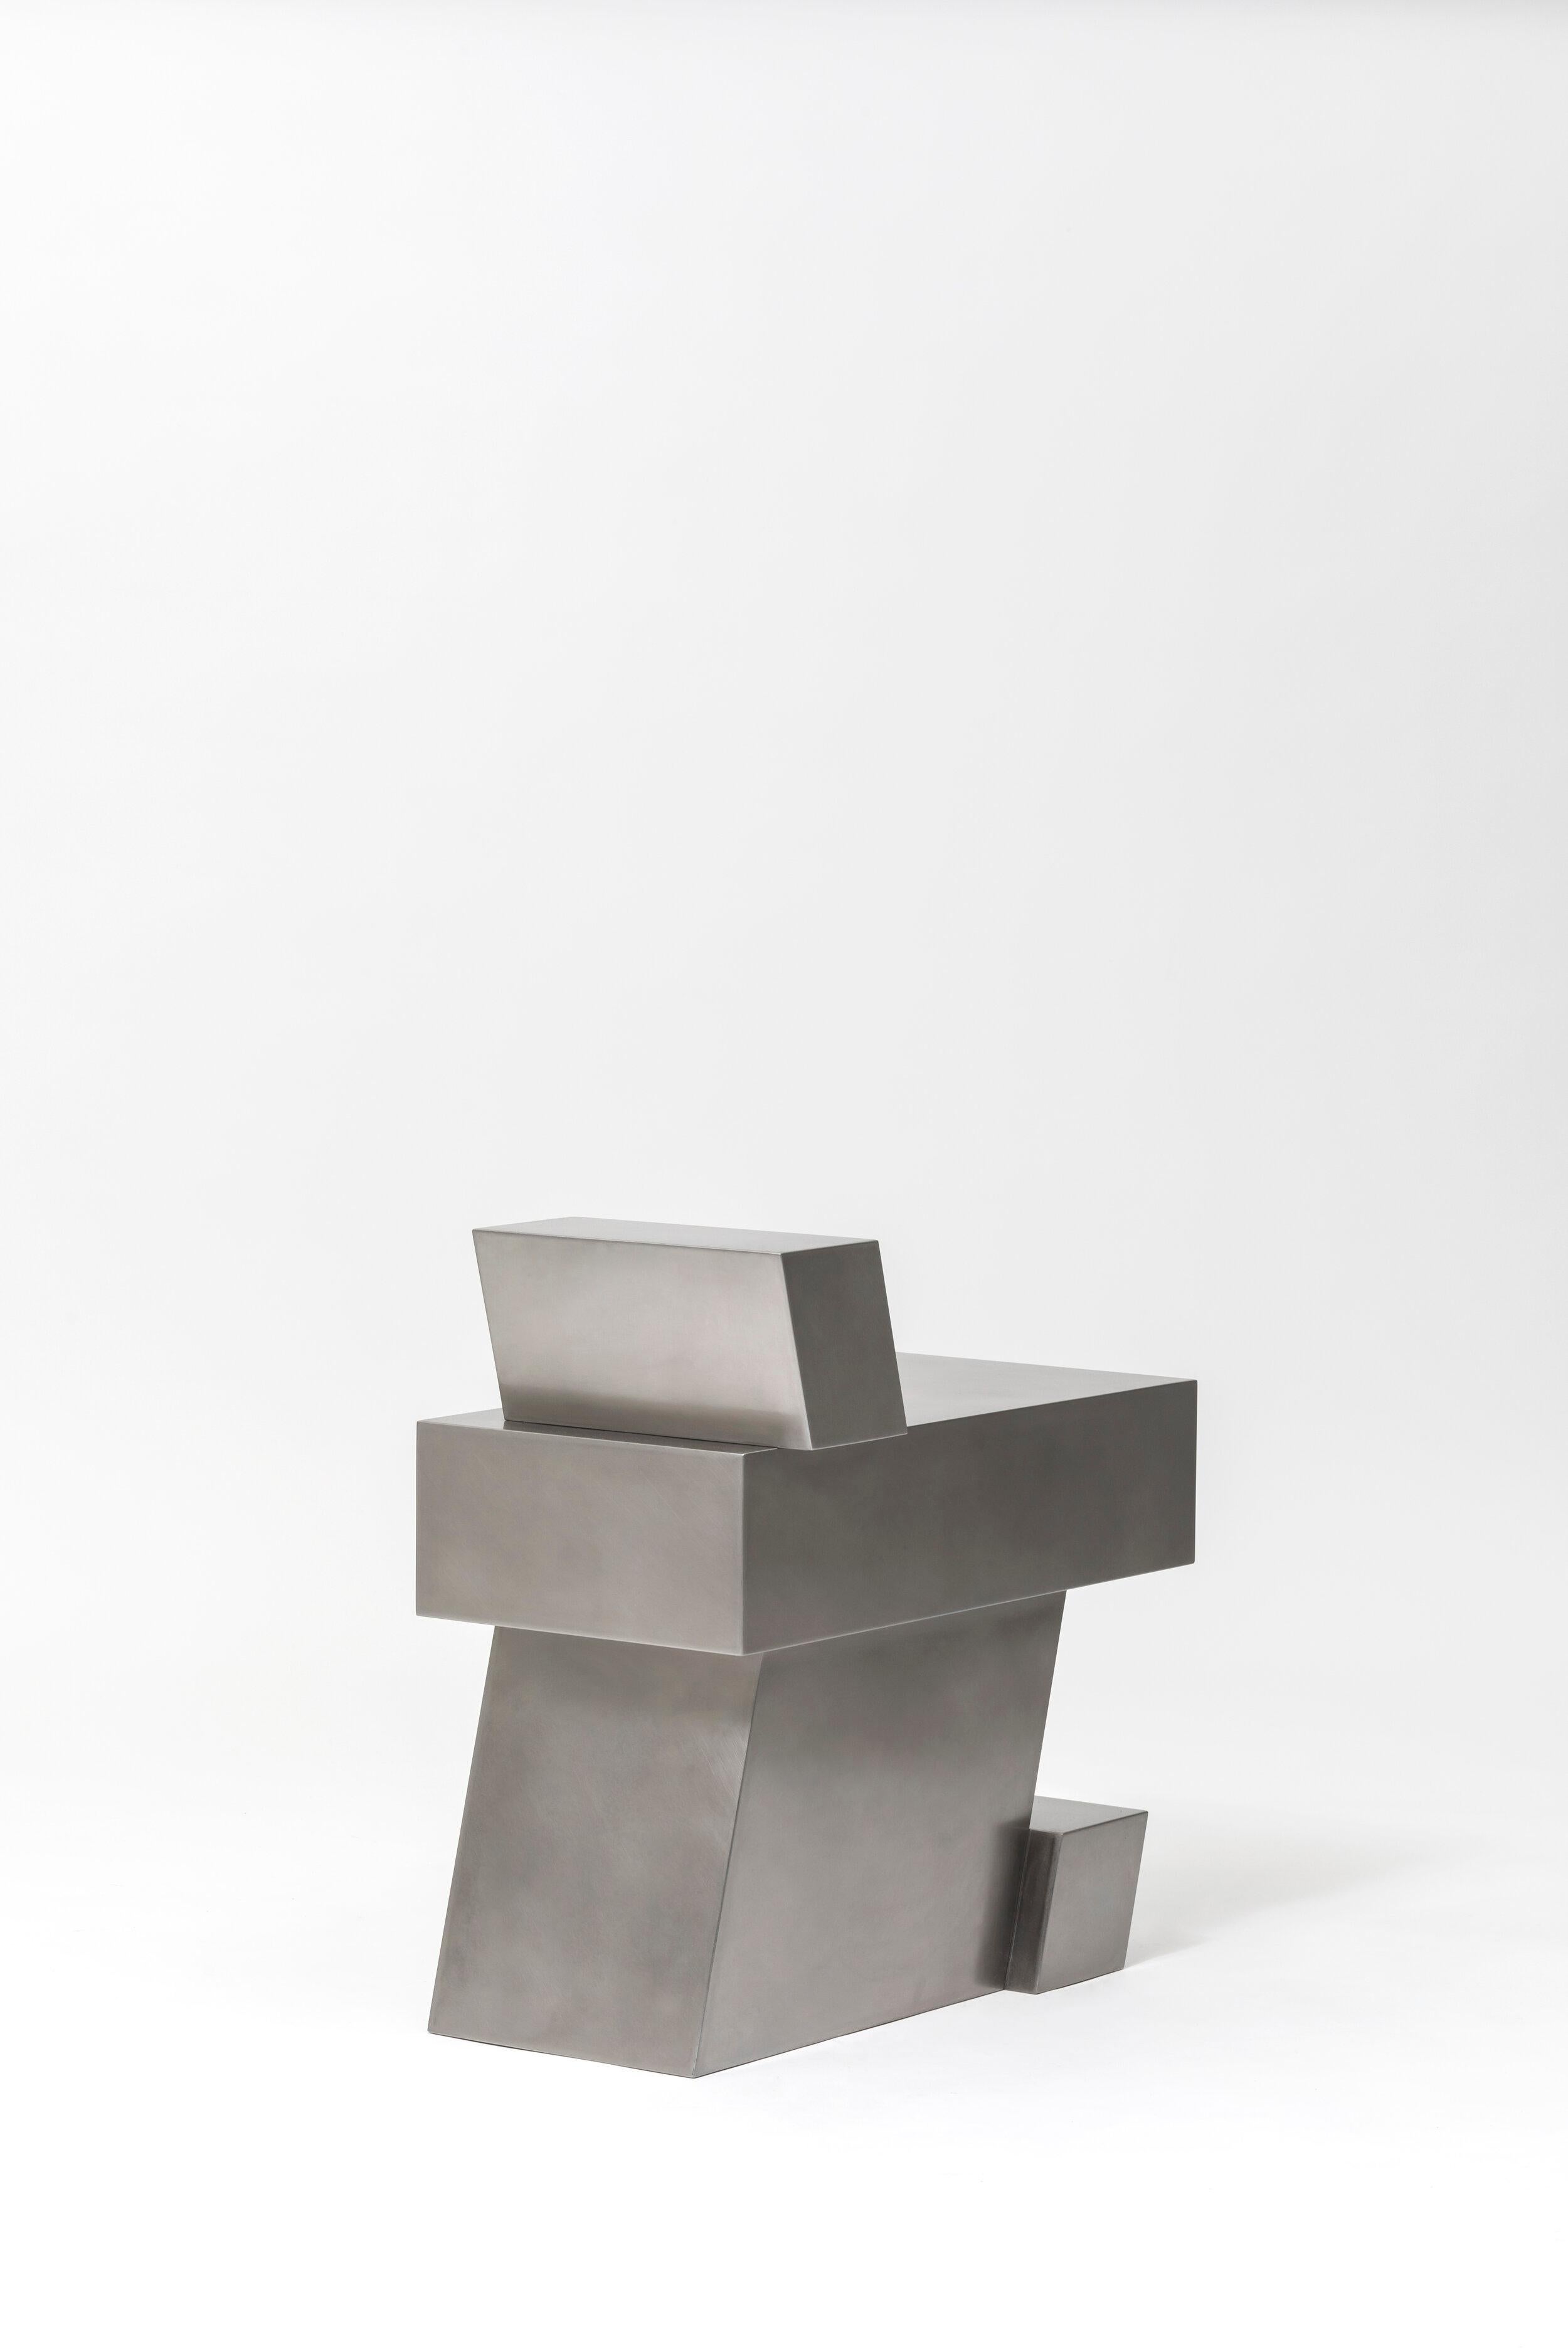 Post-Modern Layered Steel Seat XVI by Hyungshin Hwang